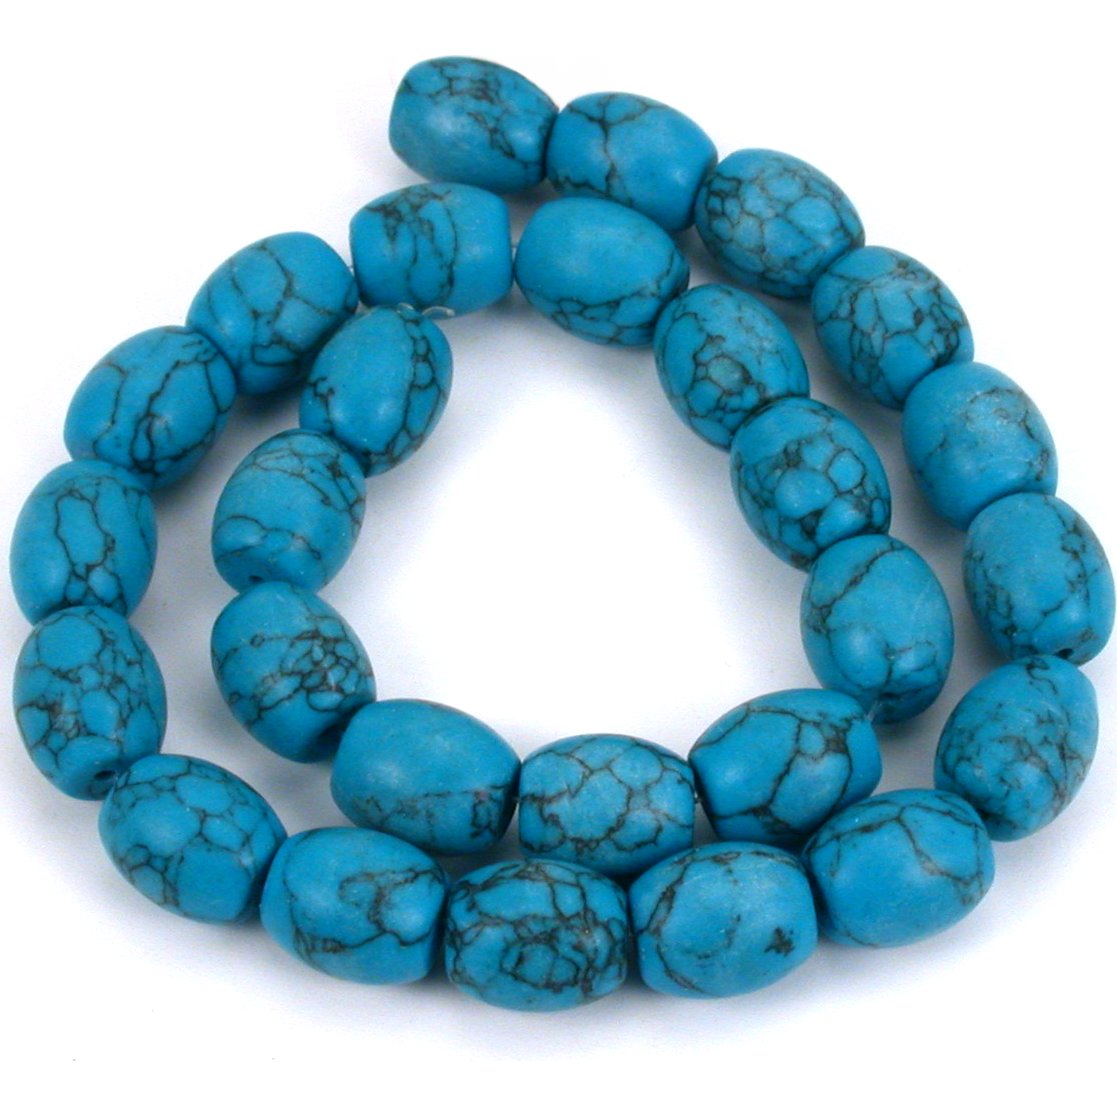 Turquoise Matrix Synthetic Barrel Beads 14mm 1 Strand